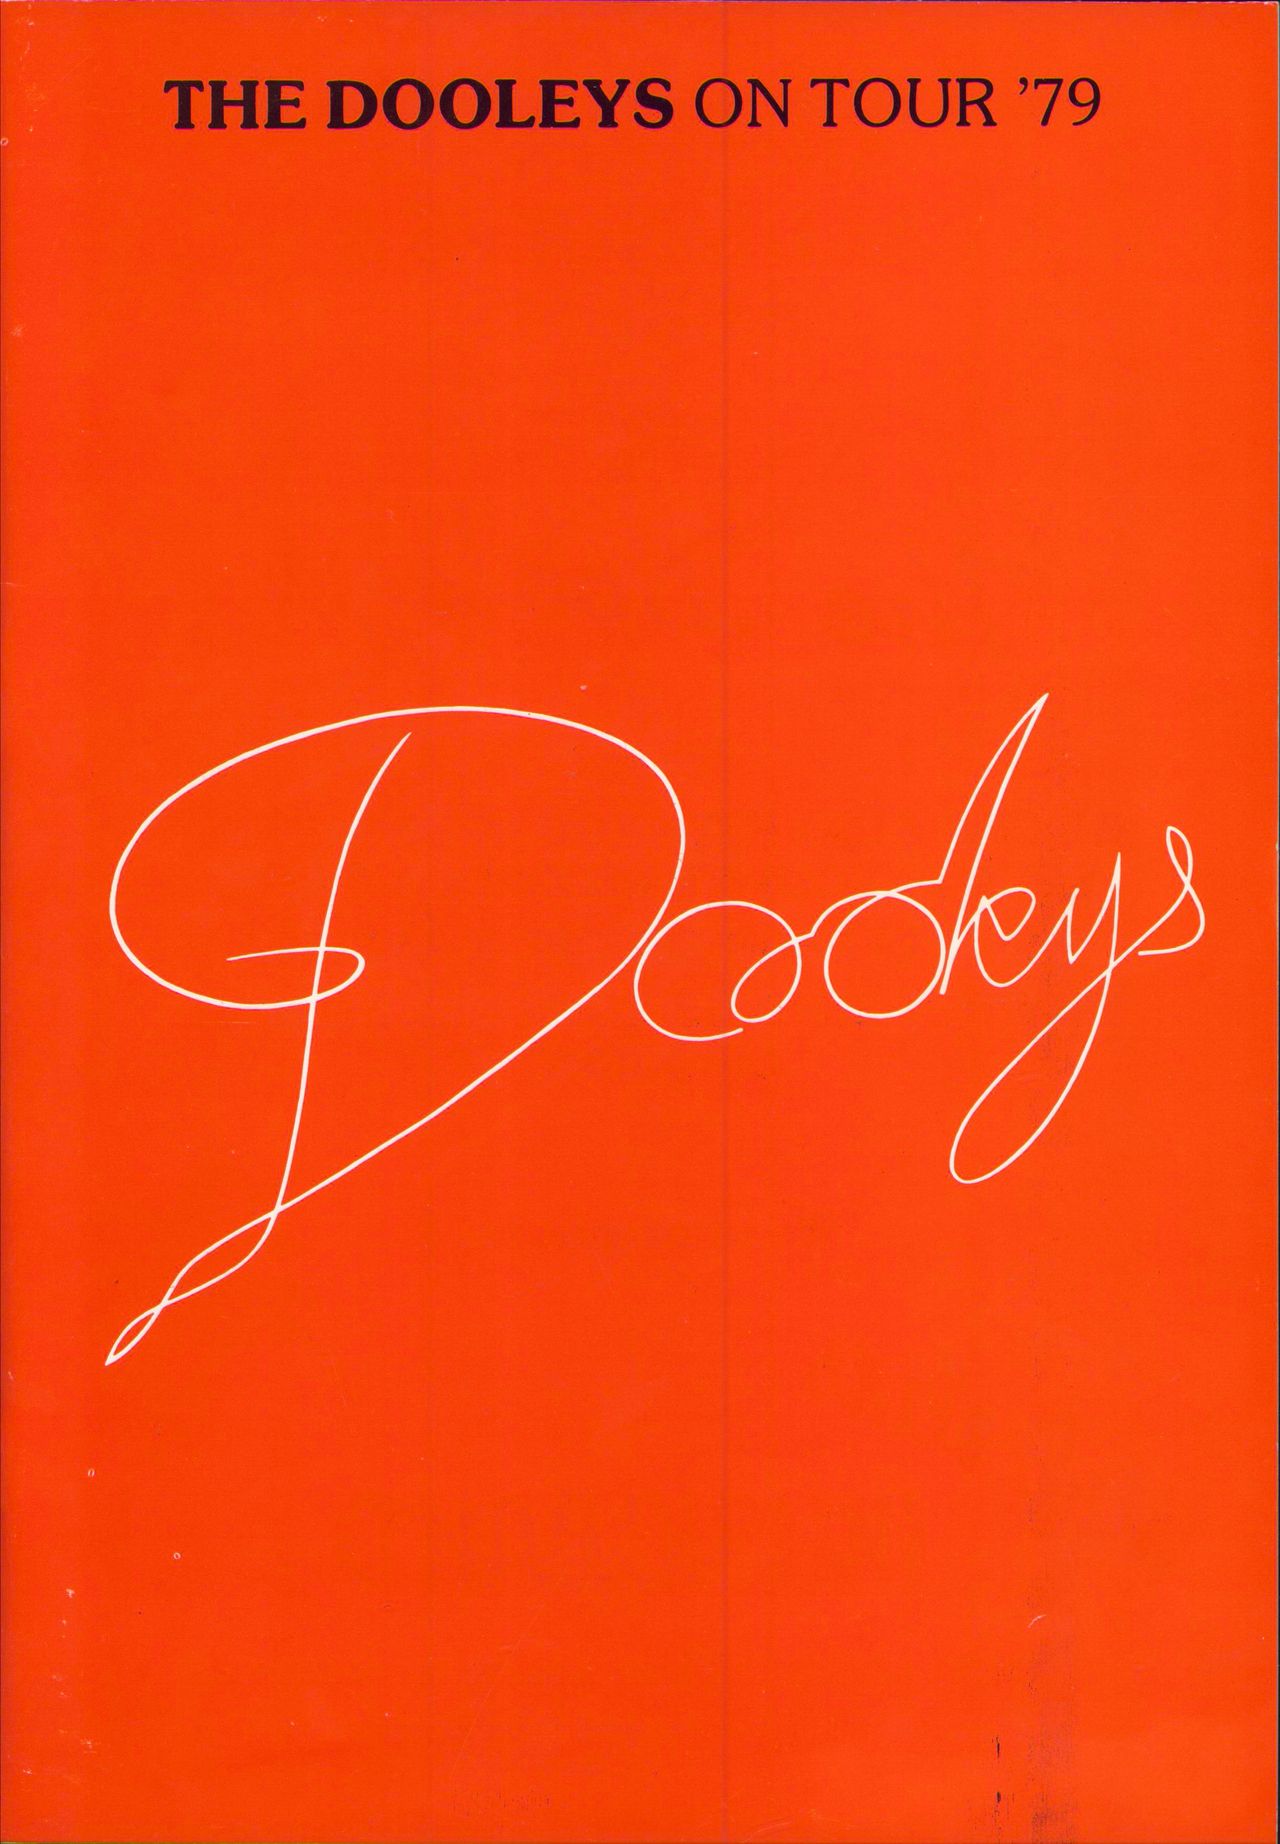 The Dooleys The Dooleys In Tour '79 - Autographed UK tour programme TOUR PROGRAMME